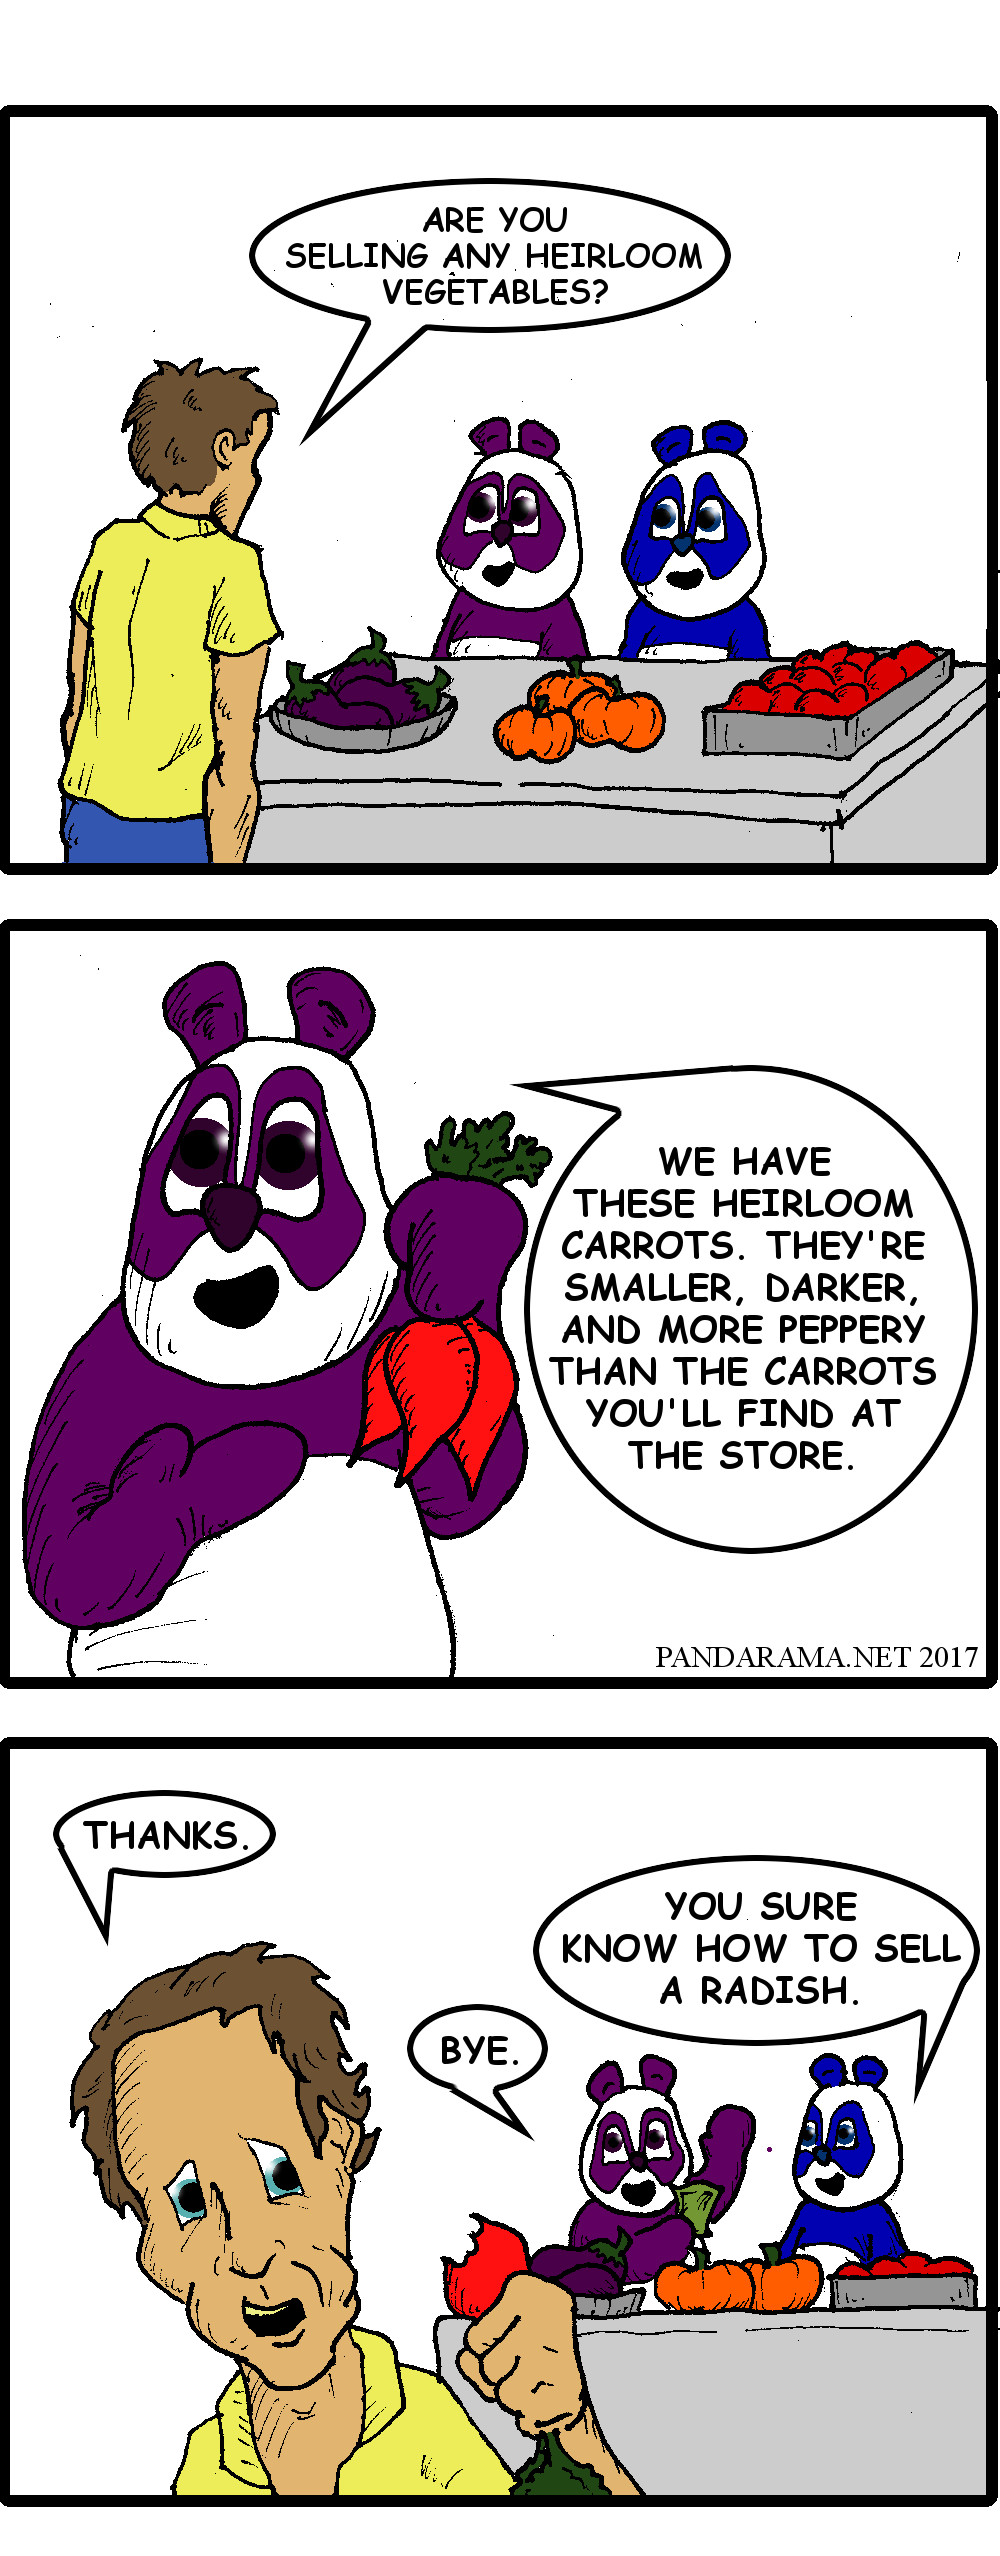 radish sold as heirloom carrot at farm stand. cartoon. pandarama. panda cartoon. heirloom vegetable cartoon. 